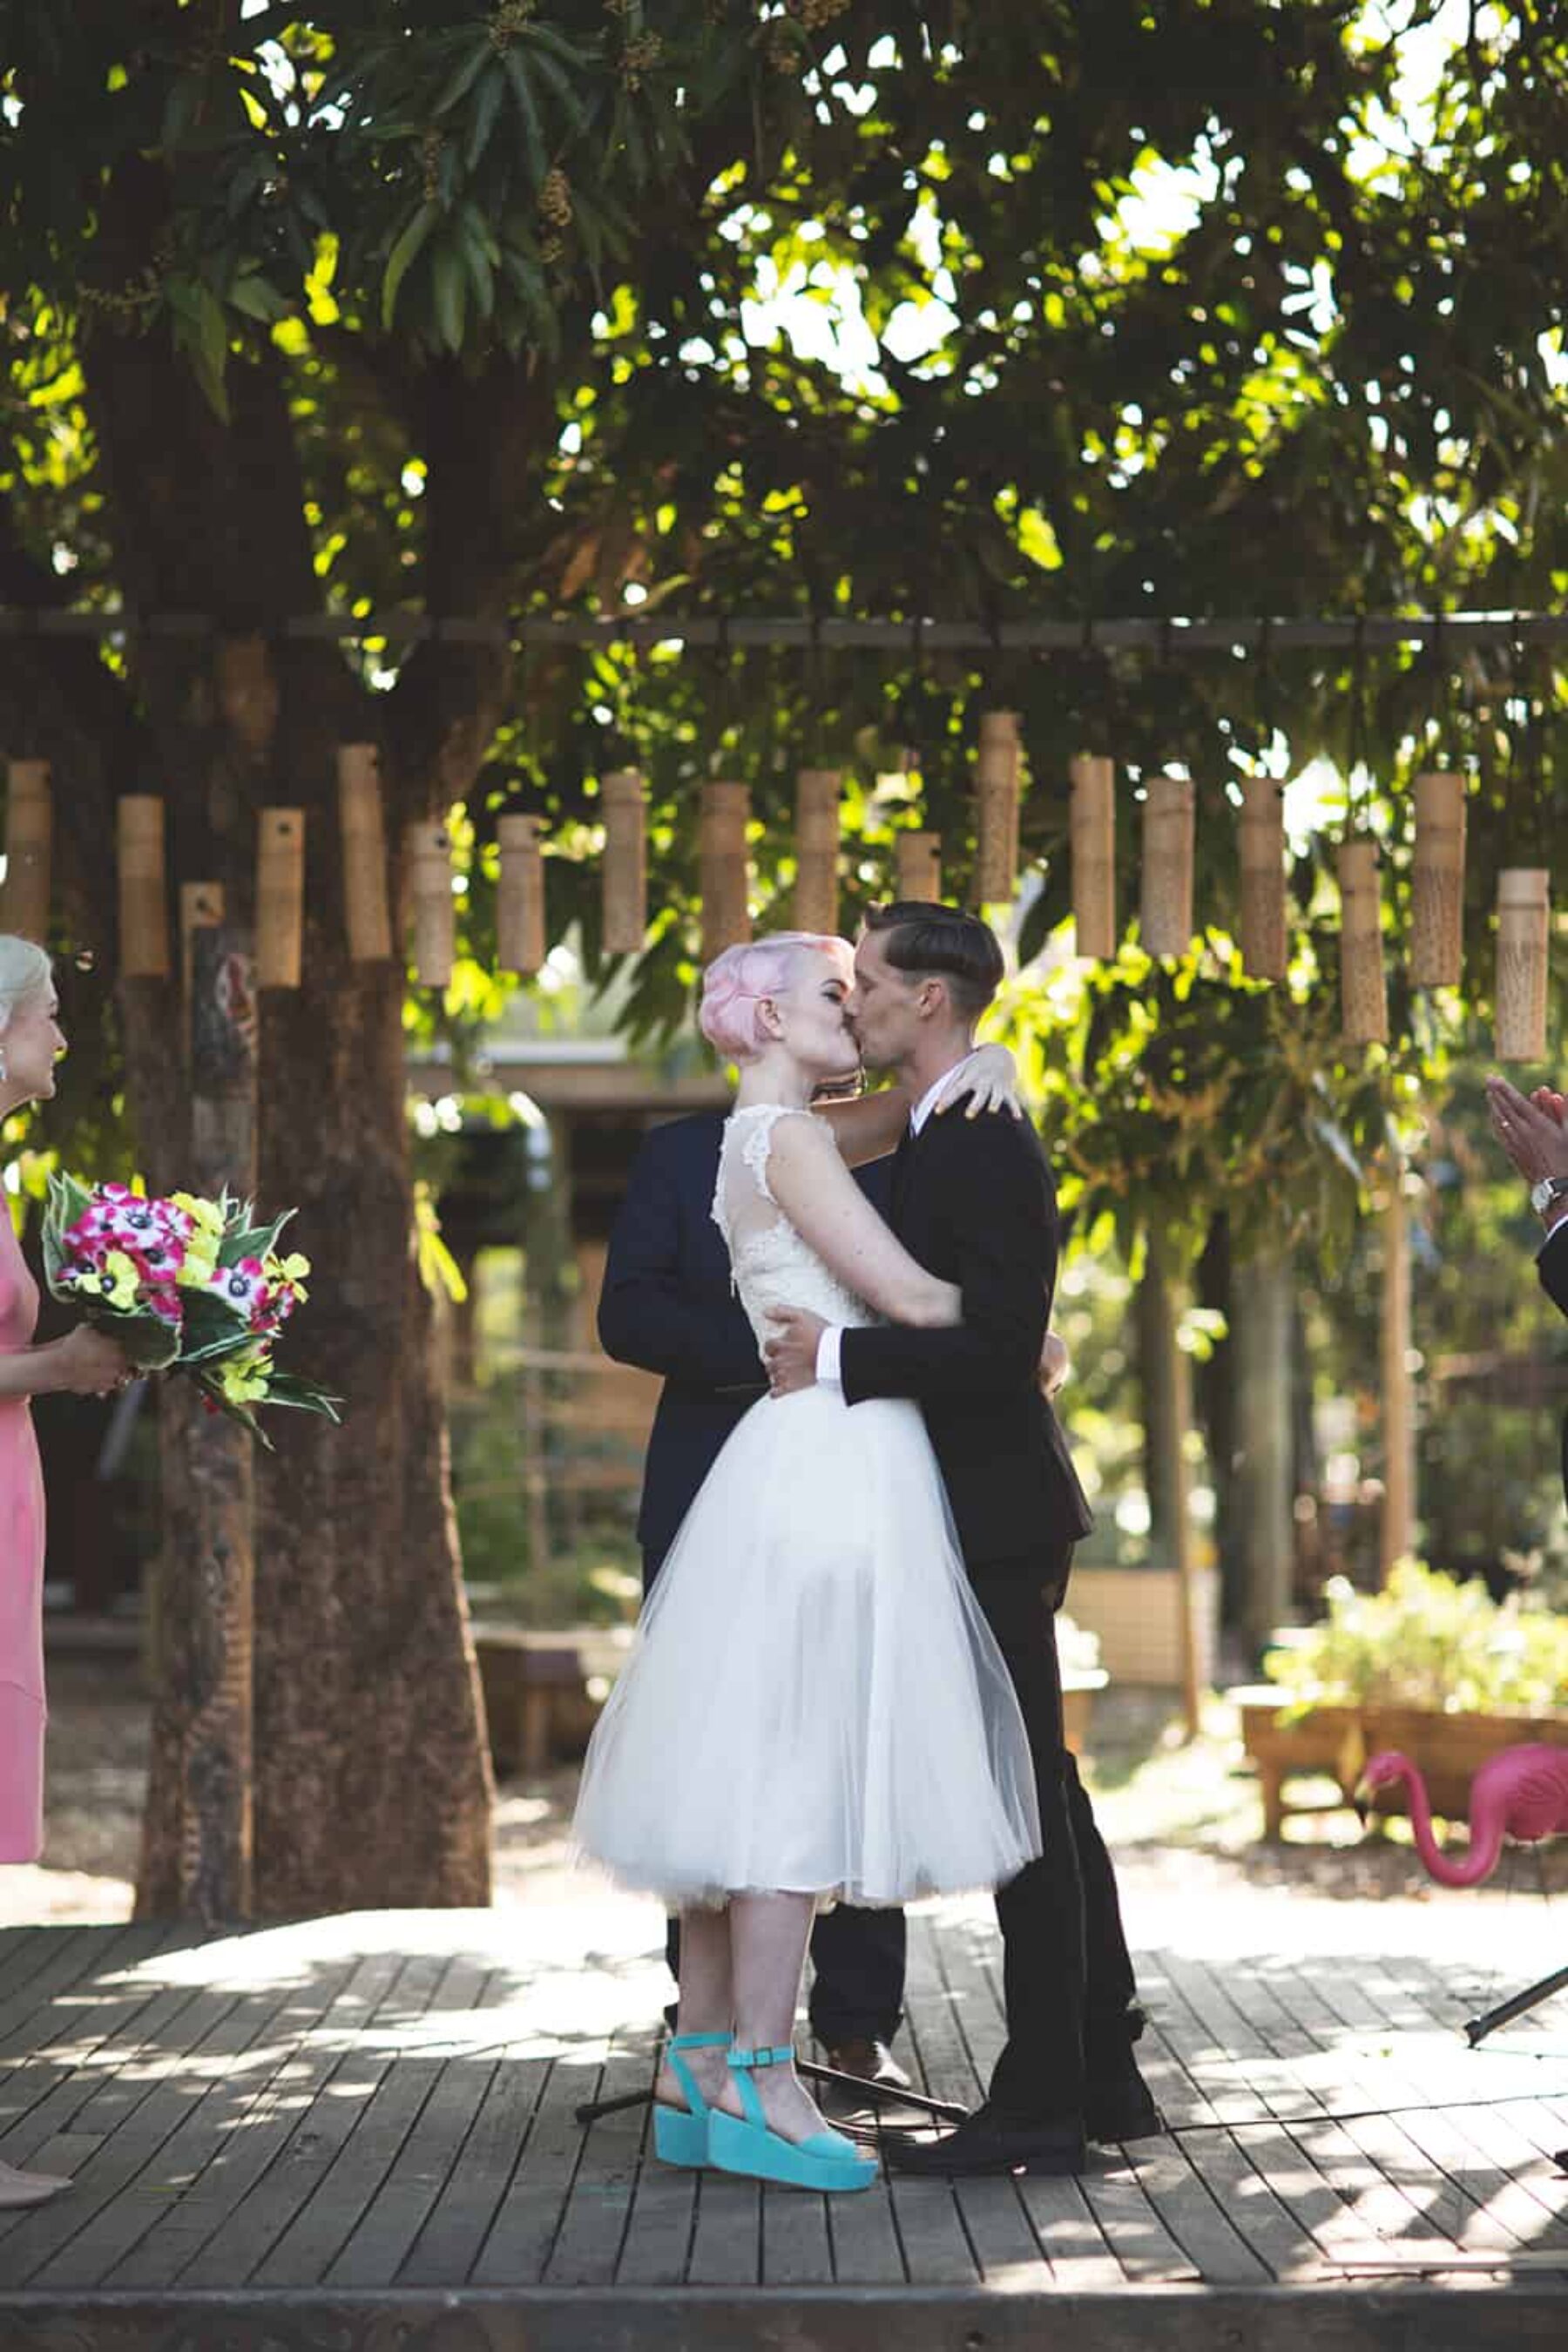 Northey Street City Farm wedding, Brisbane / Kristina Childs Photography